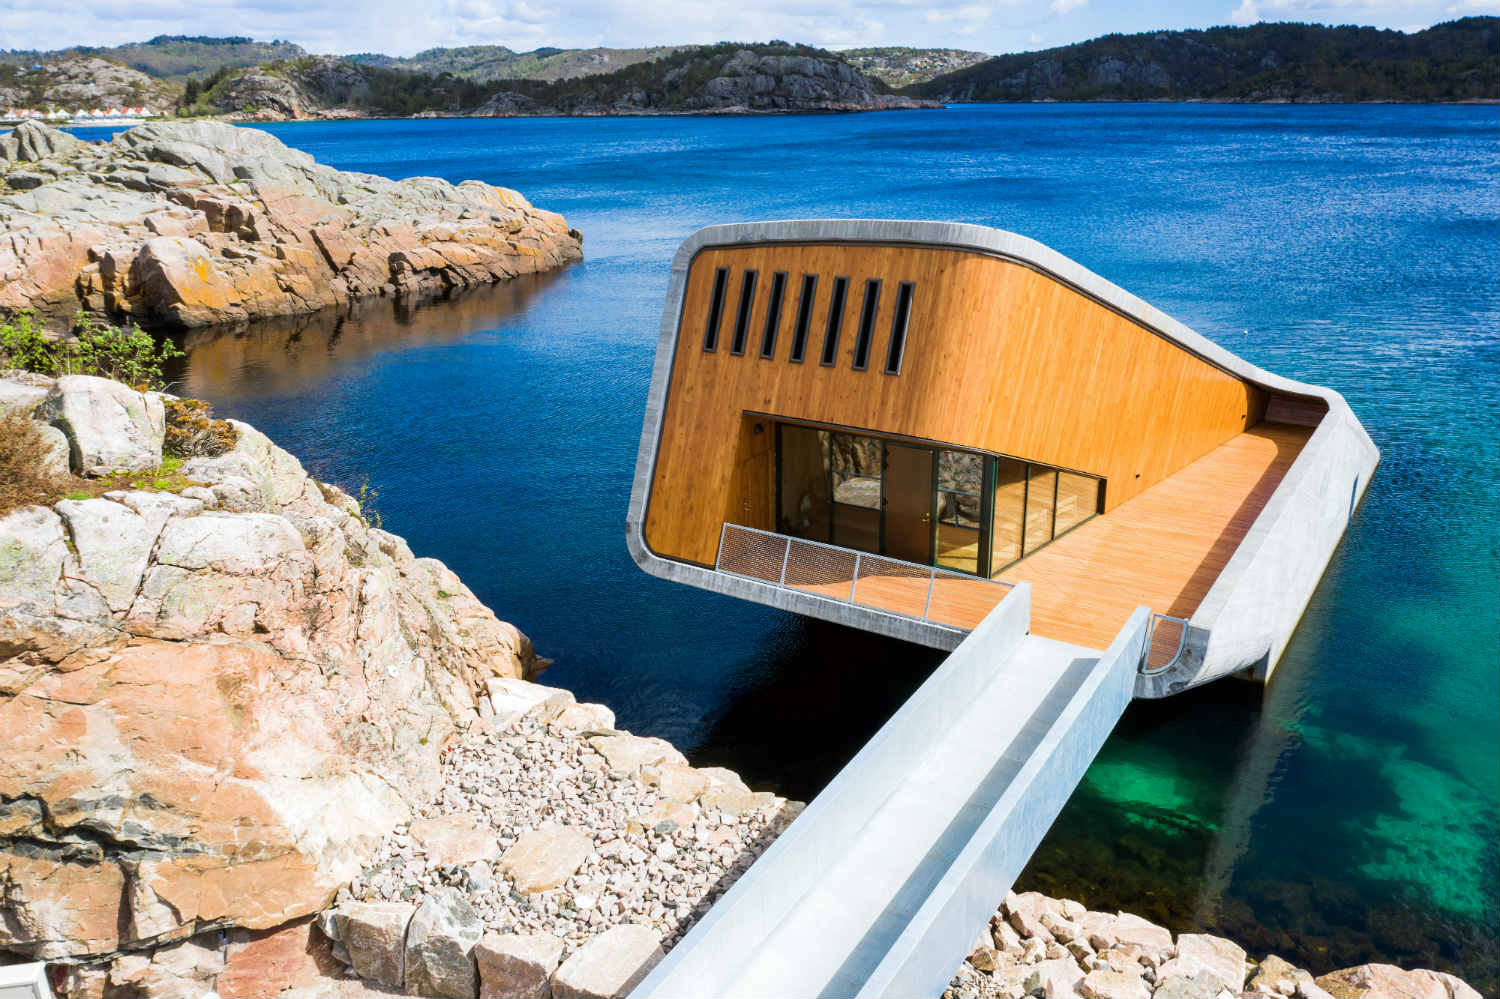 Europes First Underwater Restaurant Opens In Norway